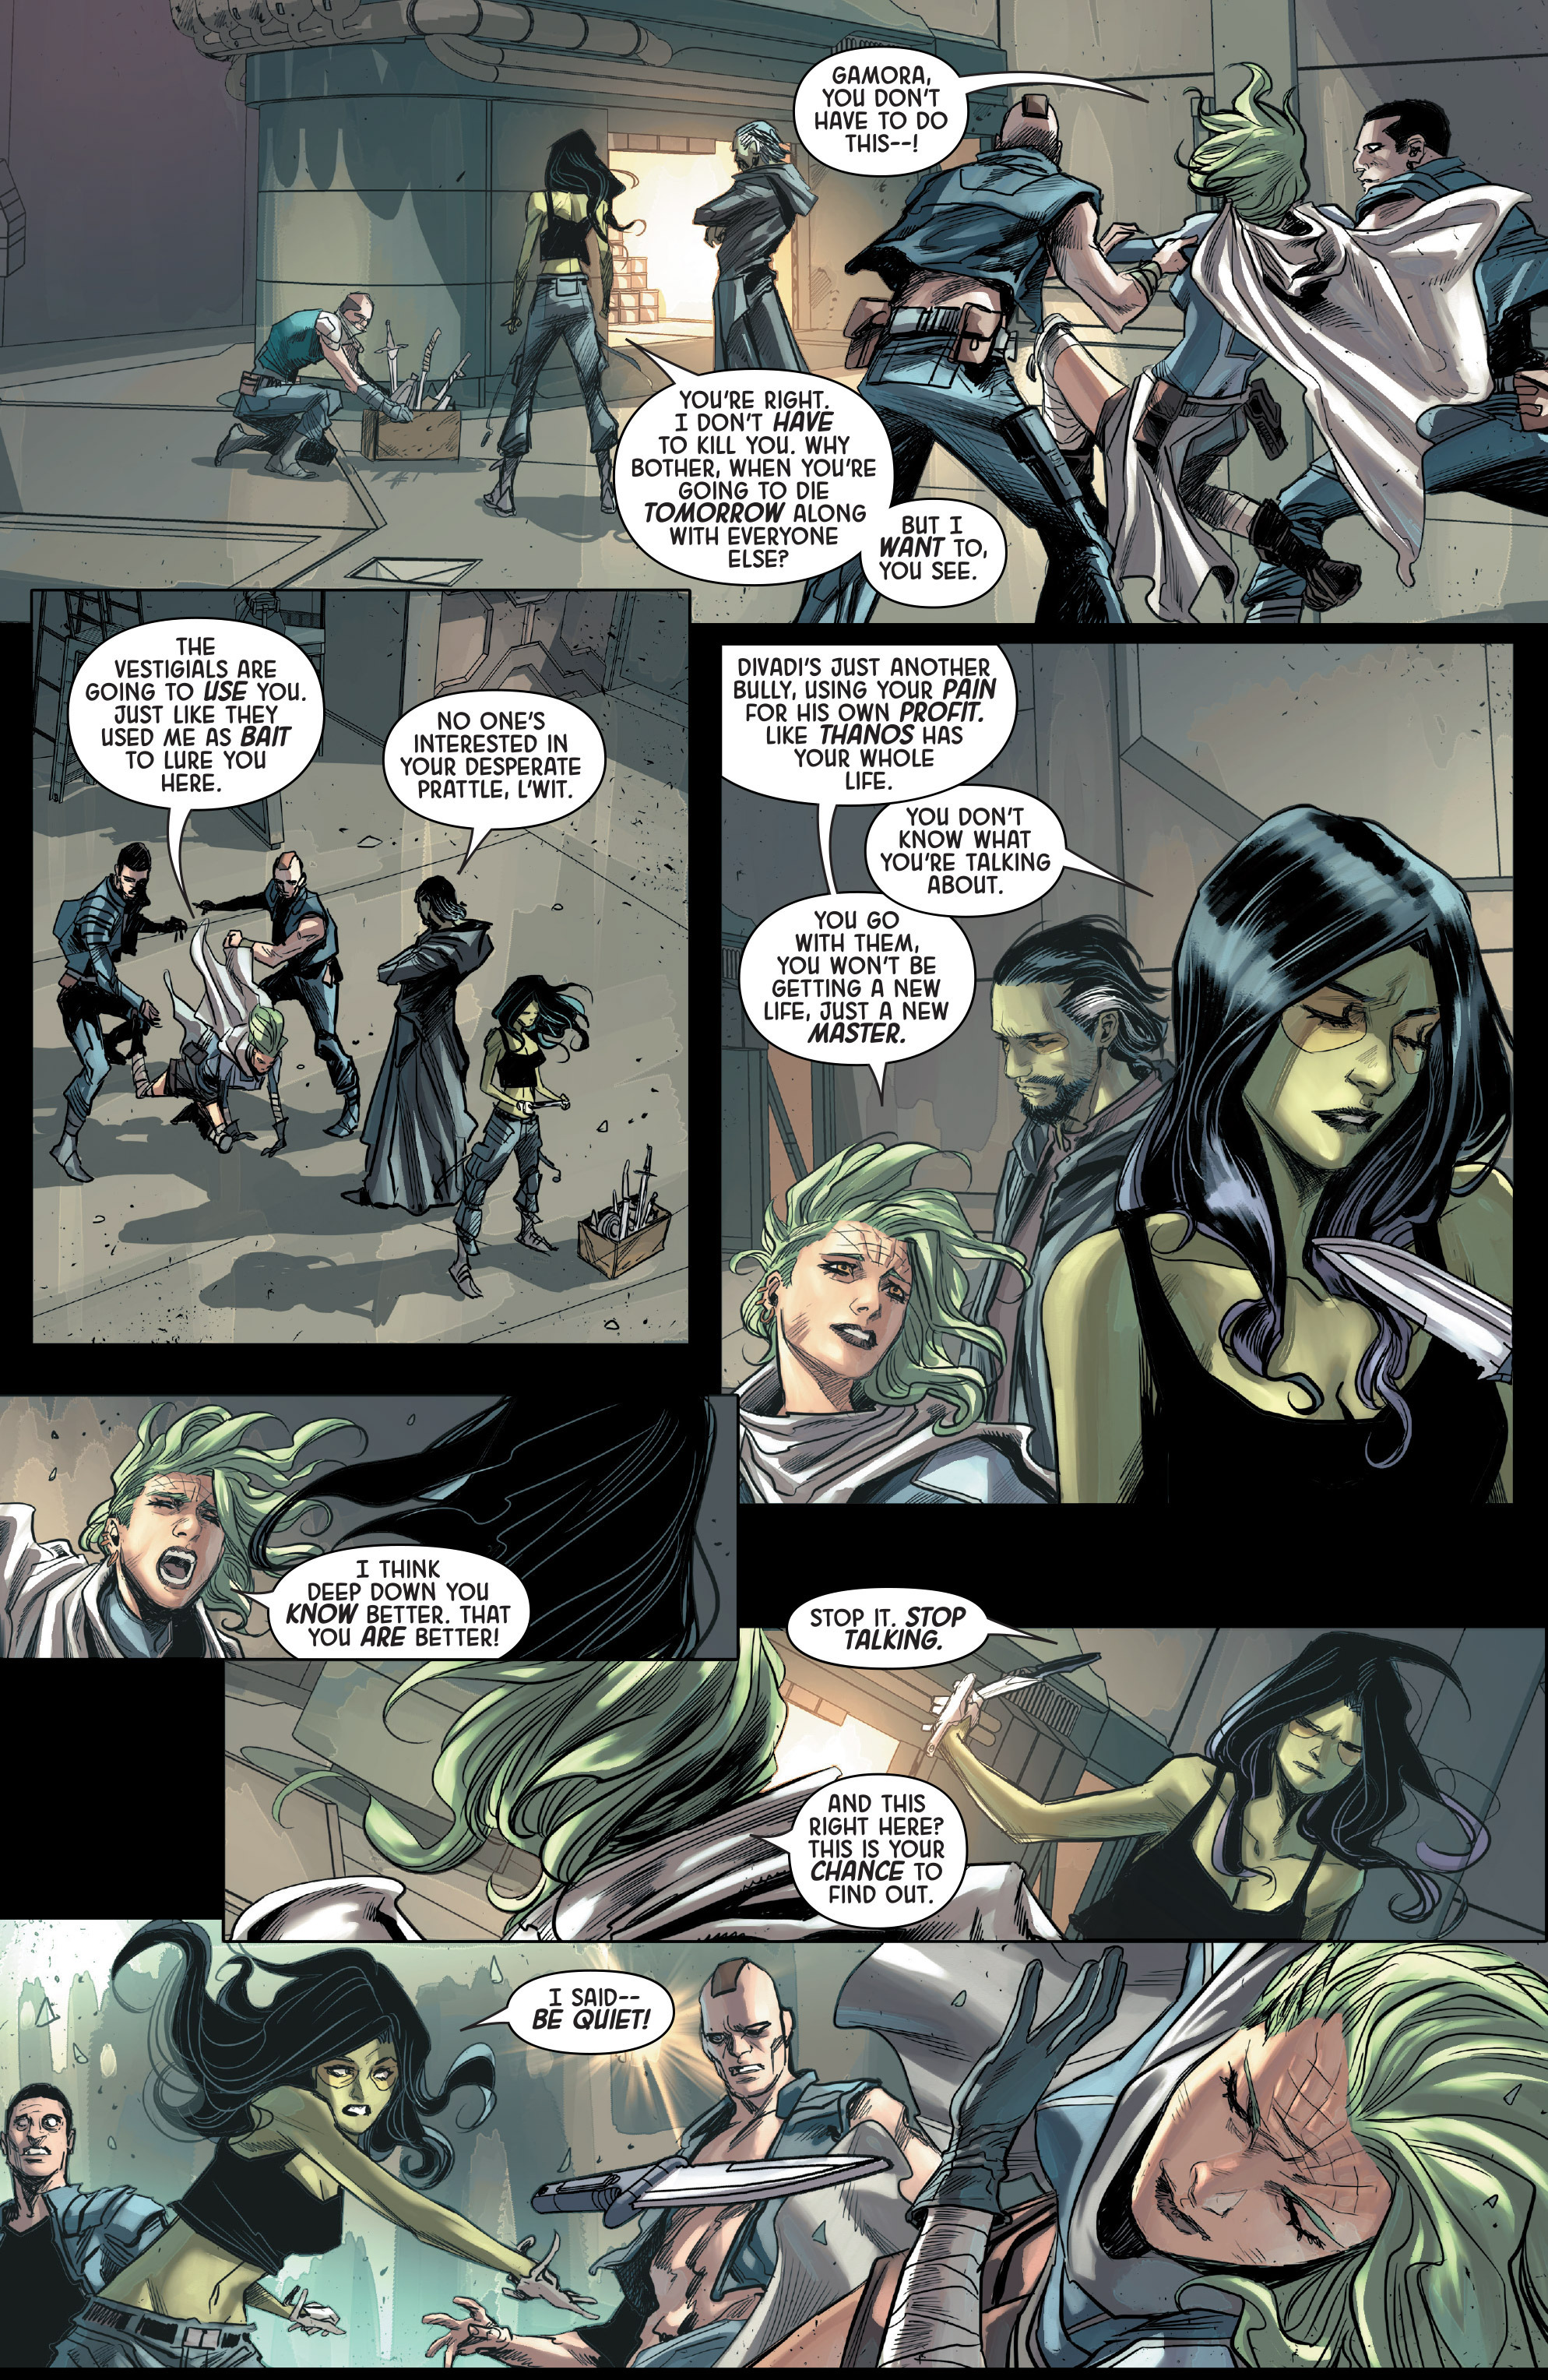 Read online Gamora comic -  Issue #4 - 6